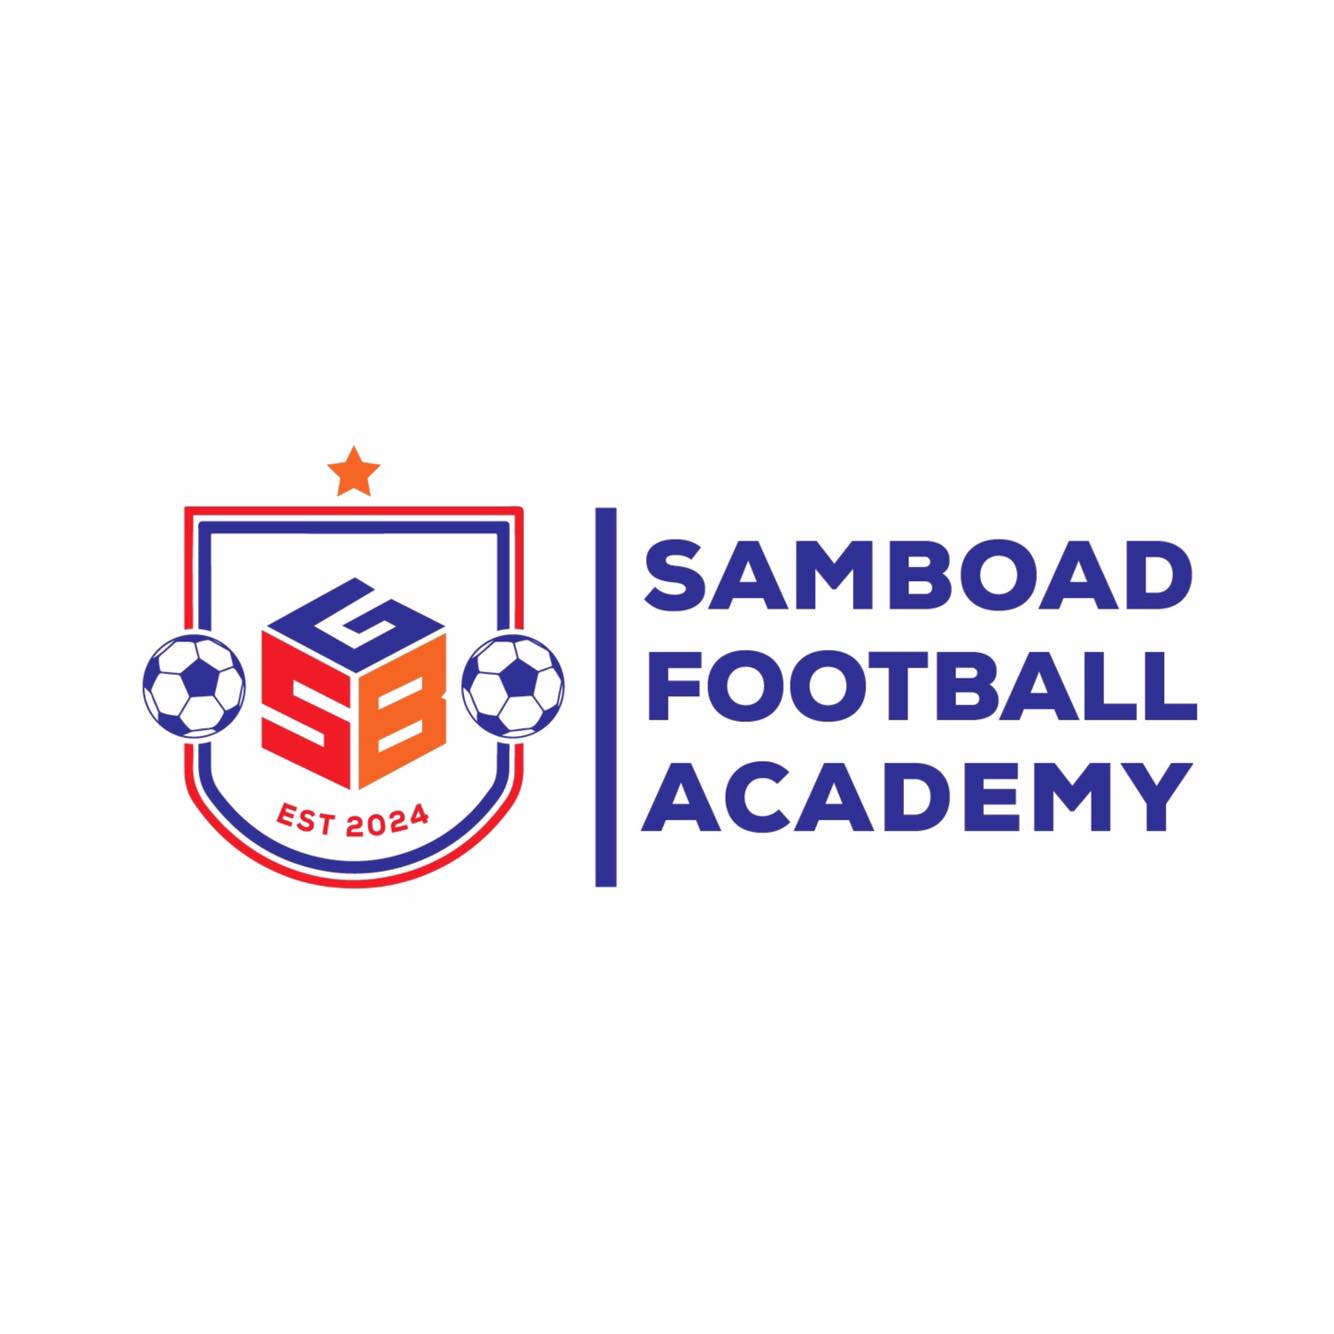 SamBoad Football Academy